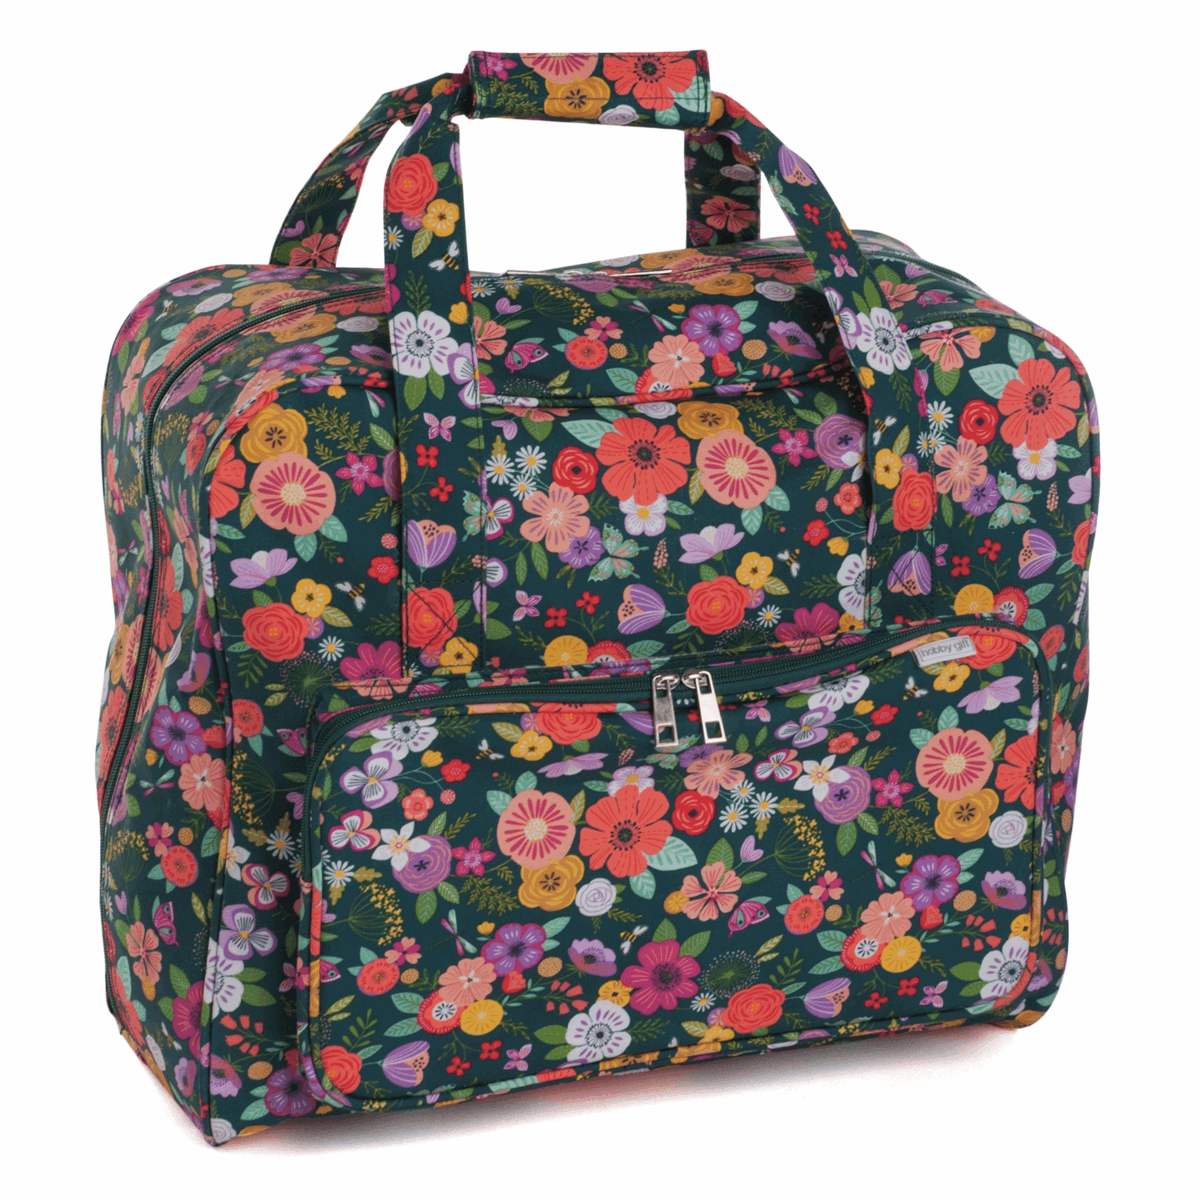 Sewing Machine Bag - Modern Floral